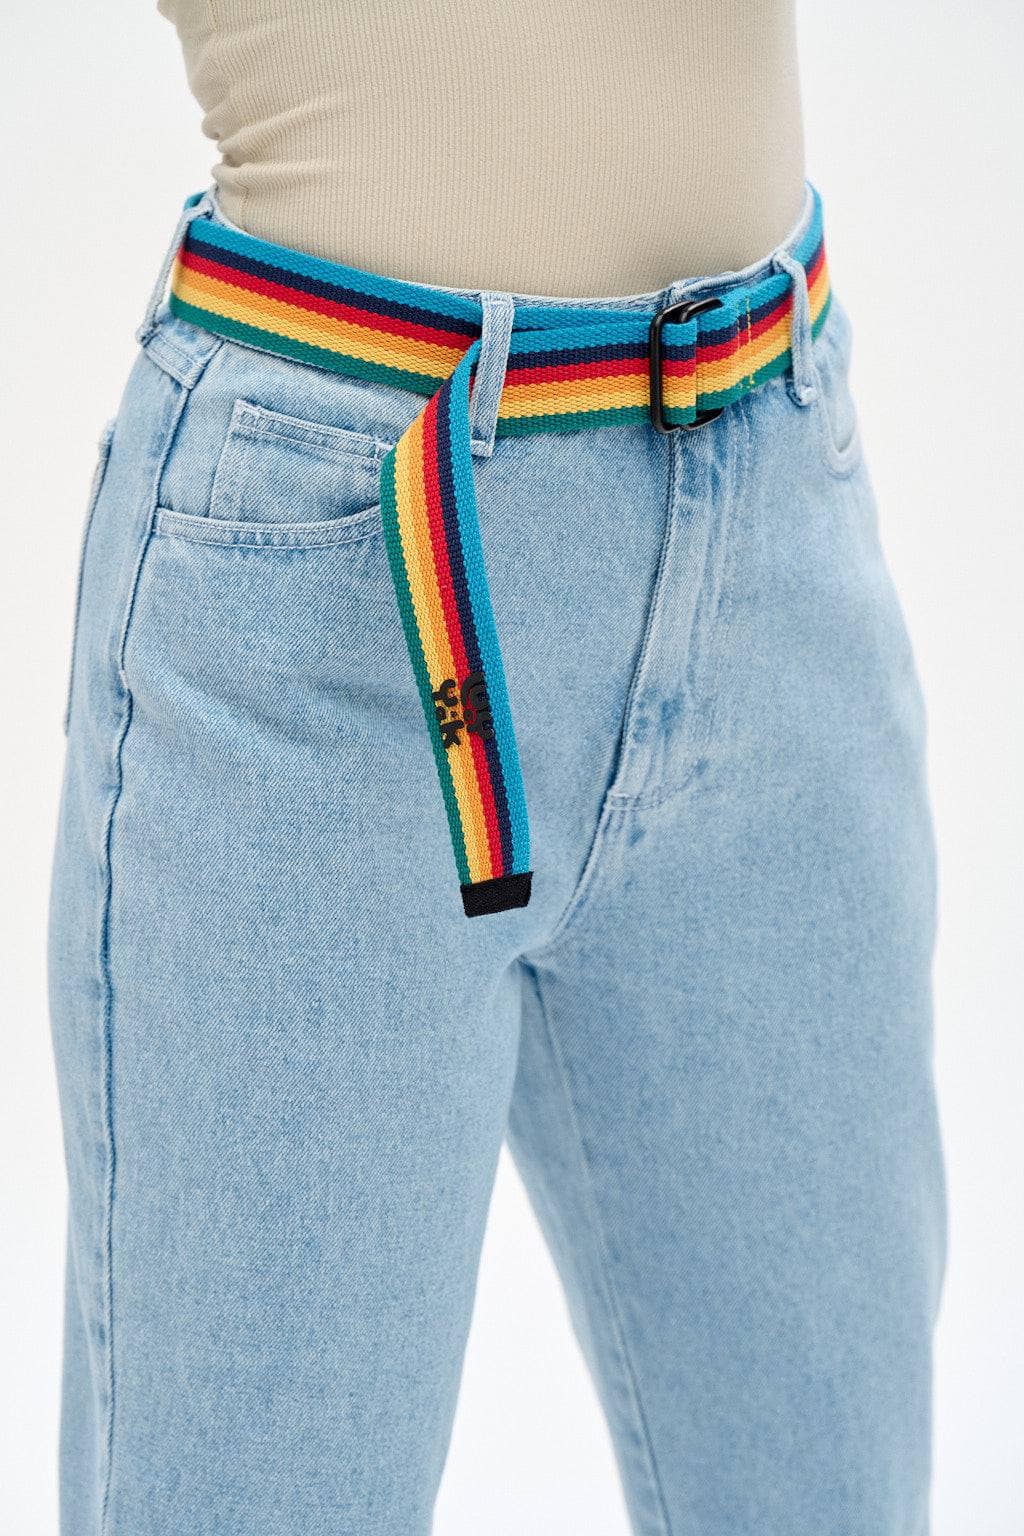 Lucy & Yak Belt Flynn Belt: ORGANIC WEBBING - Rainbow Stripe - New SKU for SS22